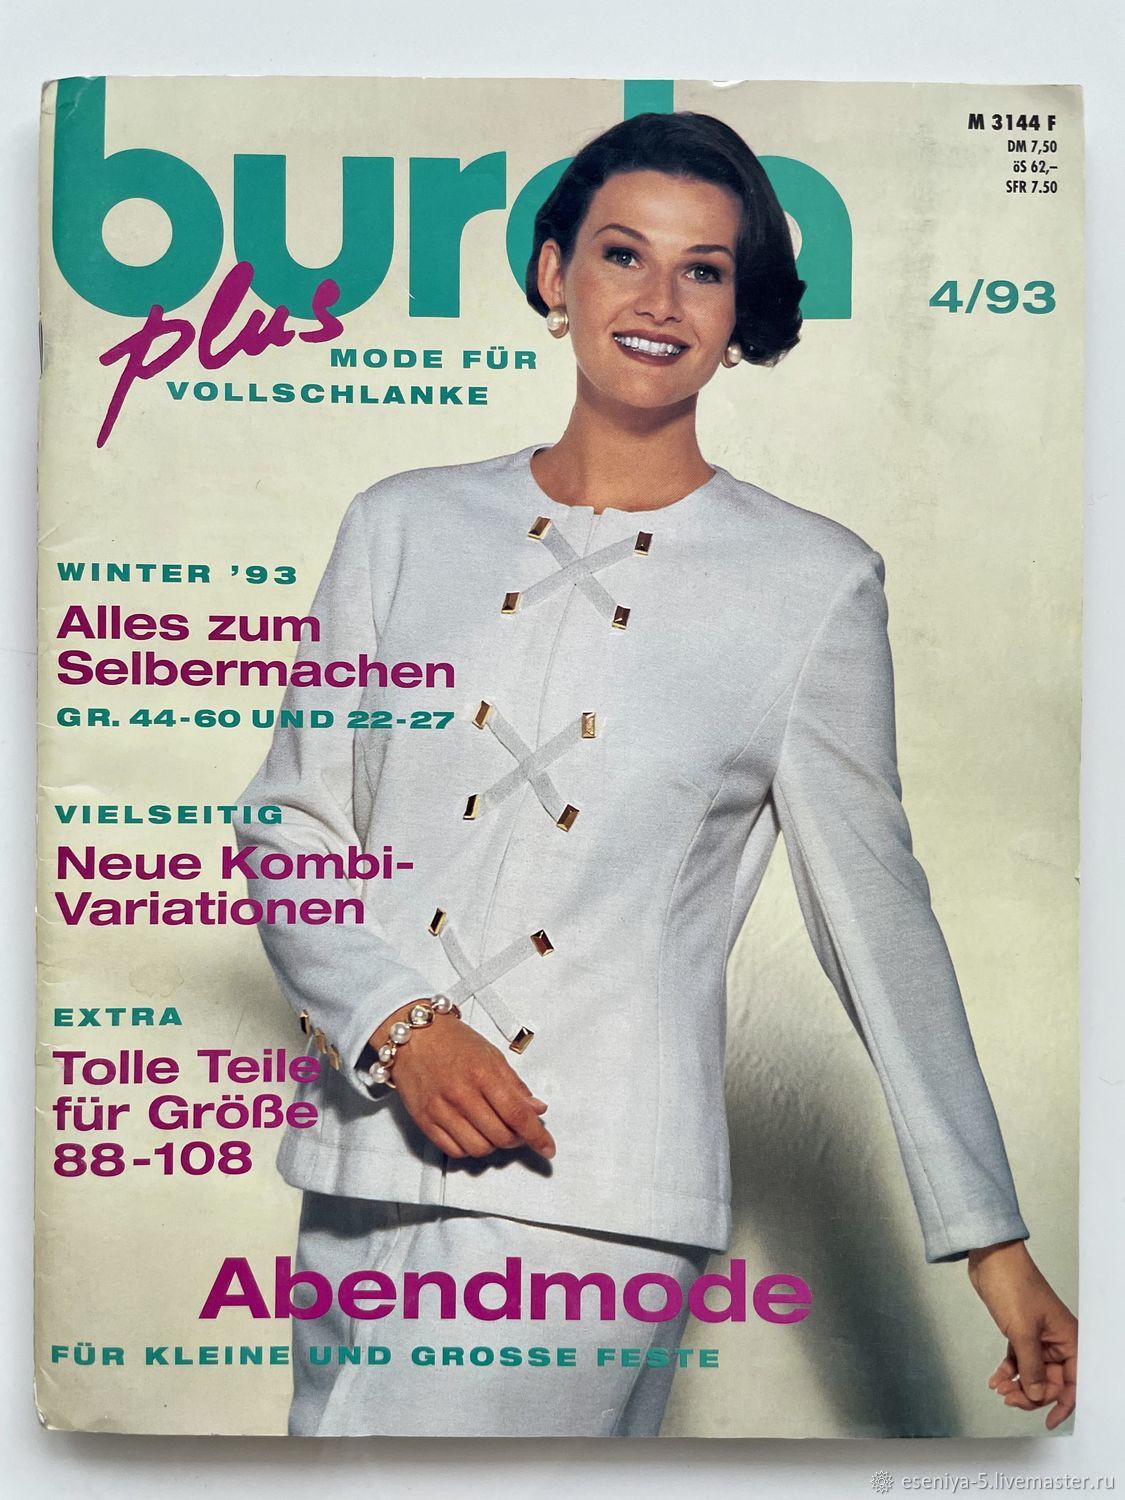 Burda Special Magazine for full 1993, Magazines, Moscow,  Фото №1